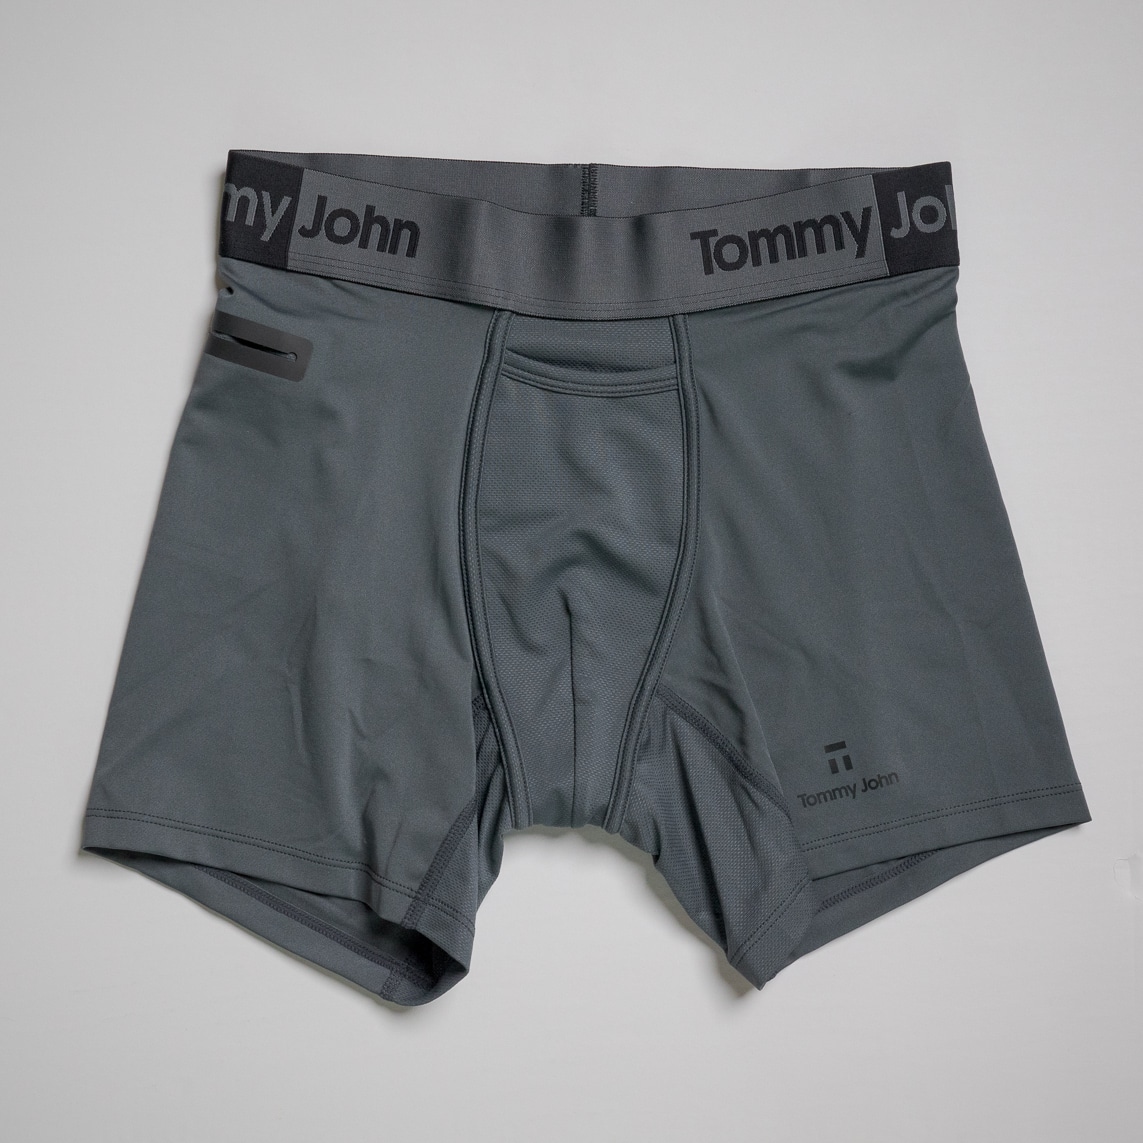 Tommy John Men's Kevin Hart Sport Printed Boxer Briefs - Macy's